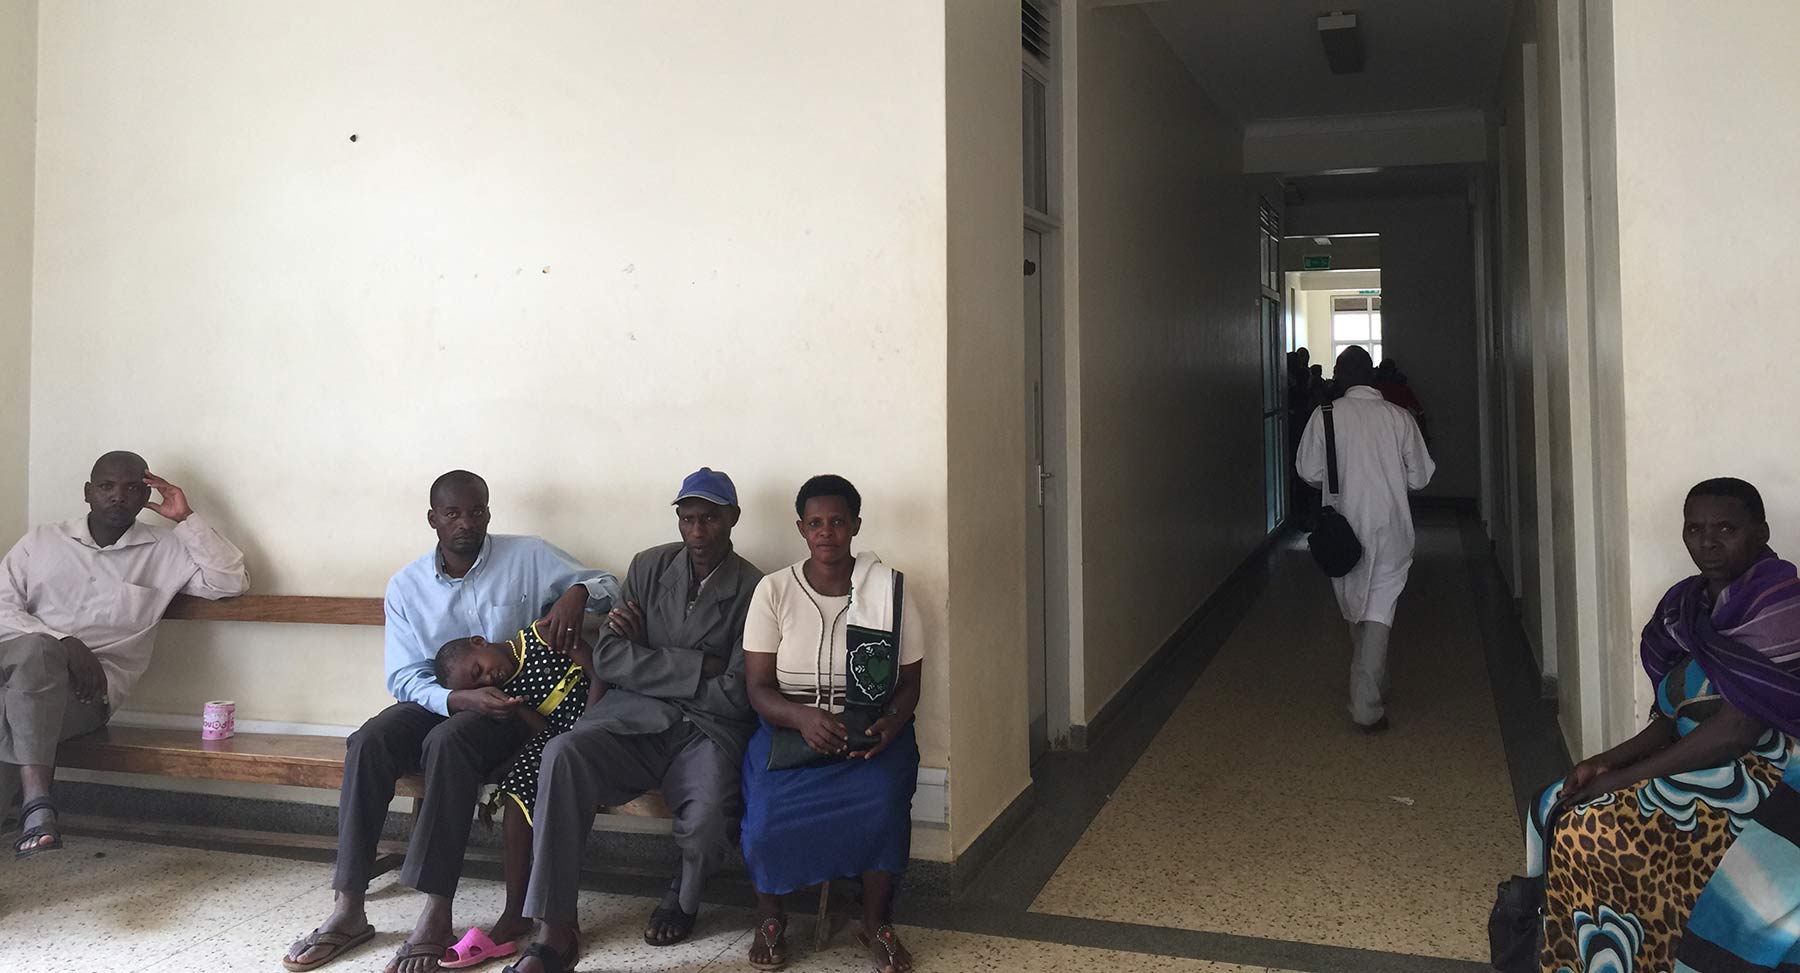 Ugandan patient waiting room, UVA radiology global health partnership